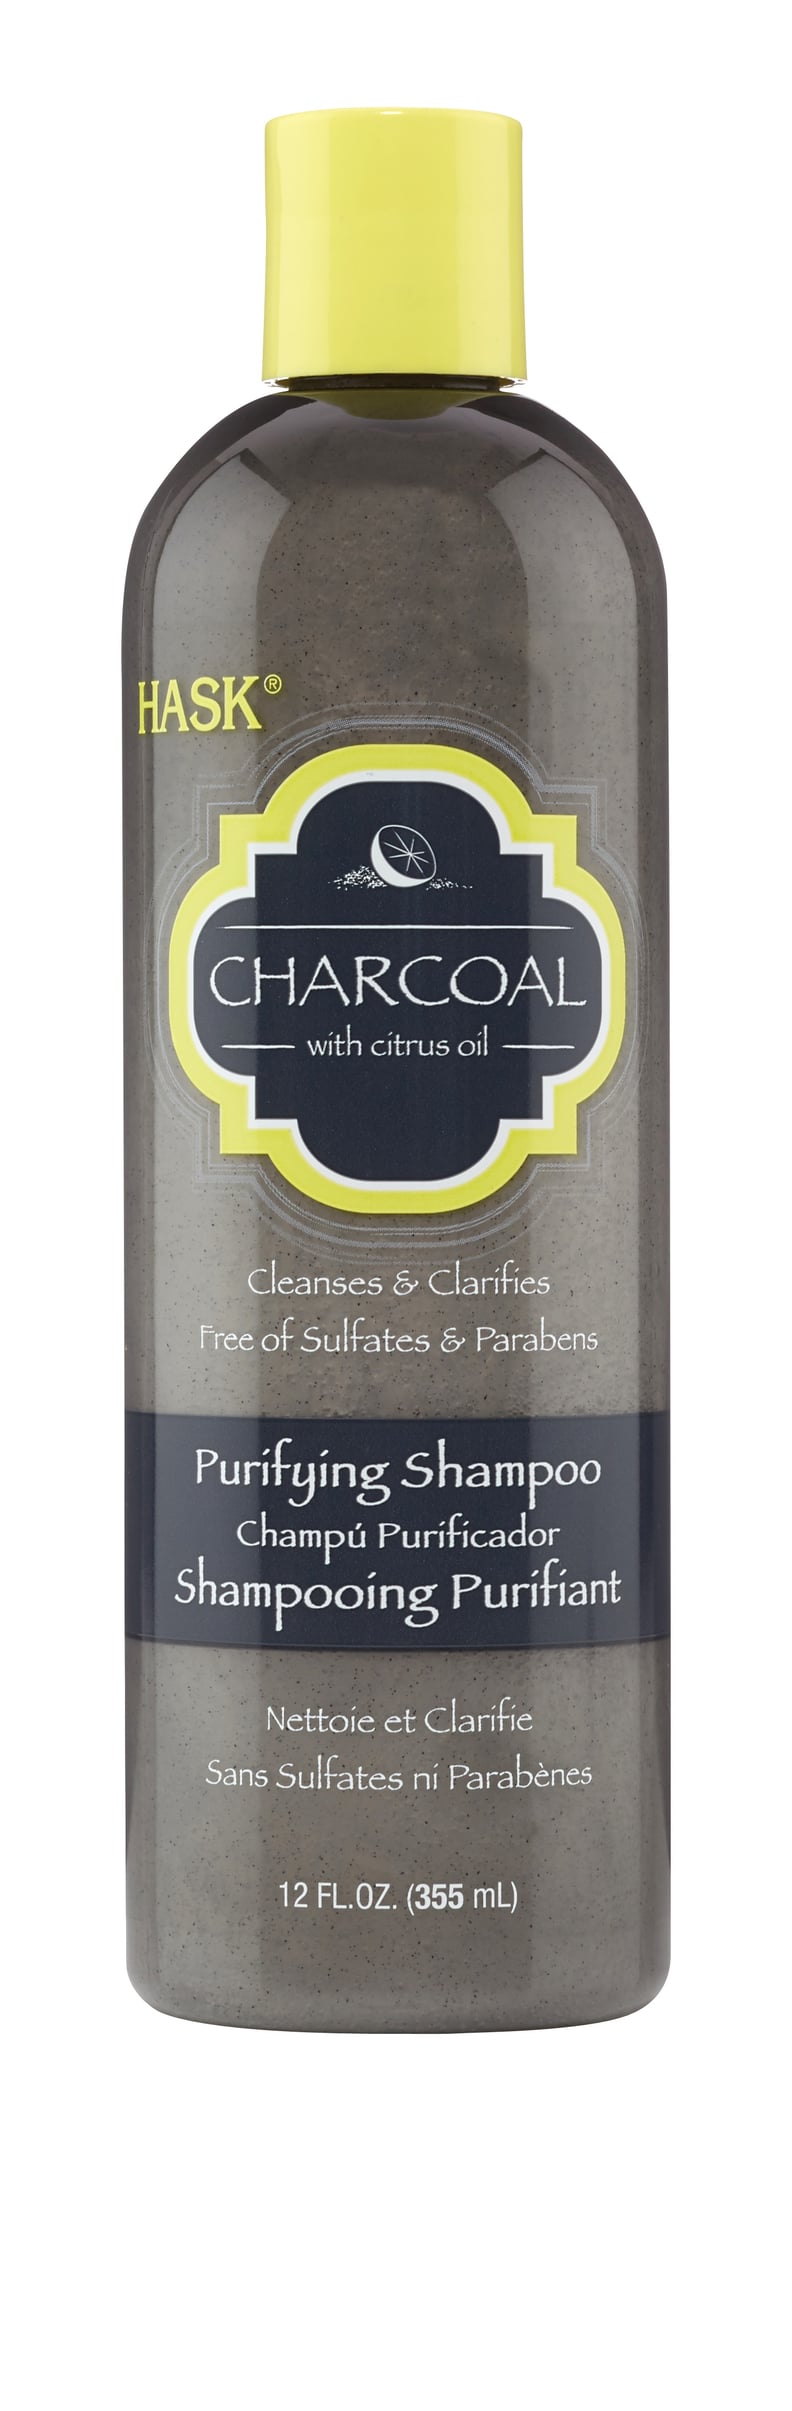 Hask Charcoal Clarifying Shampoo